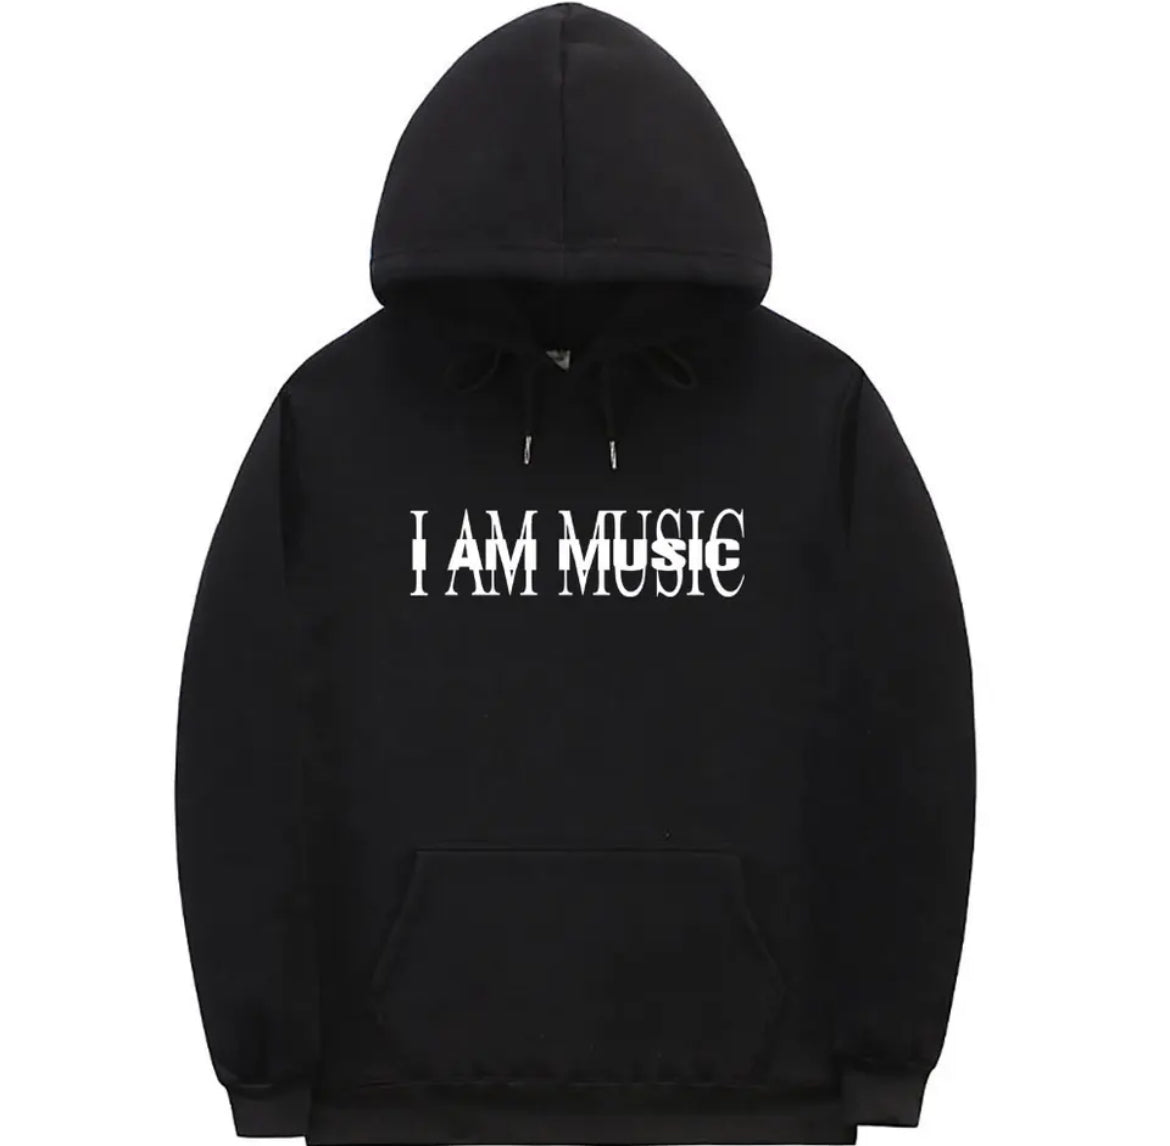 I AM MUSIC CARTI Sweatshirt